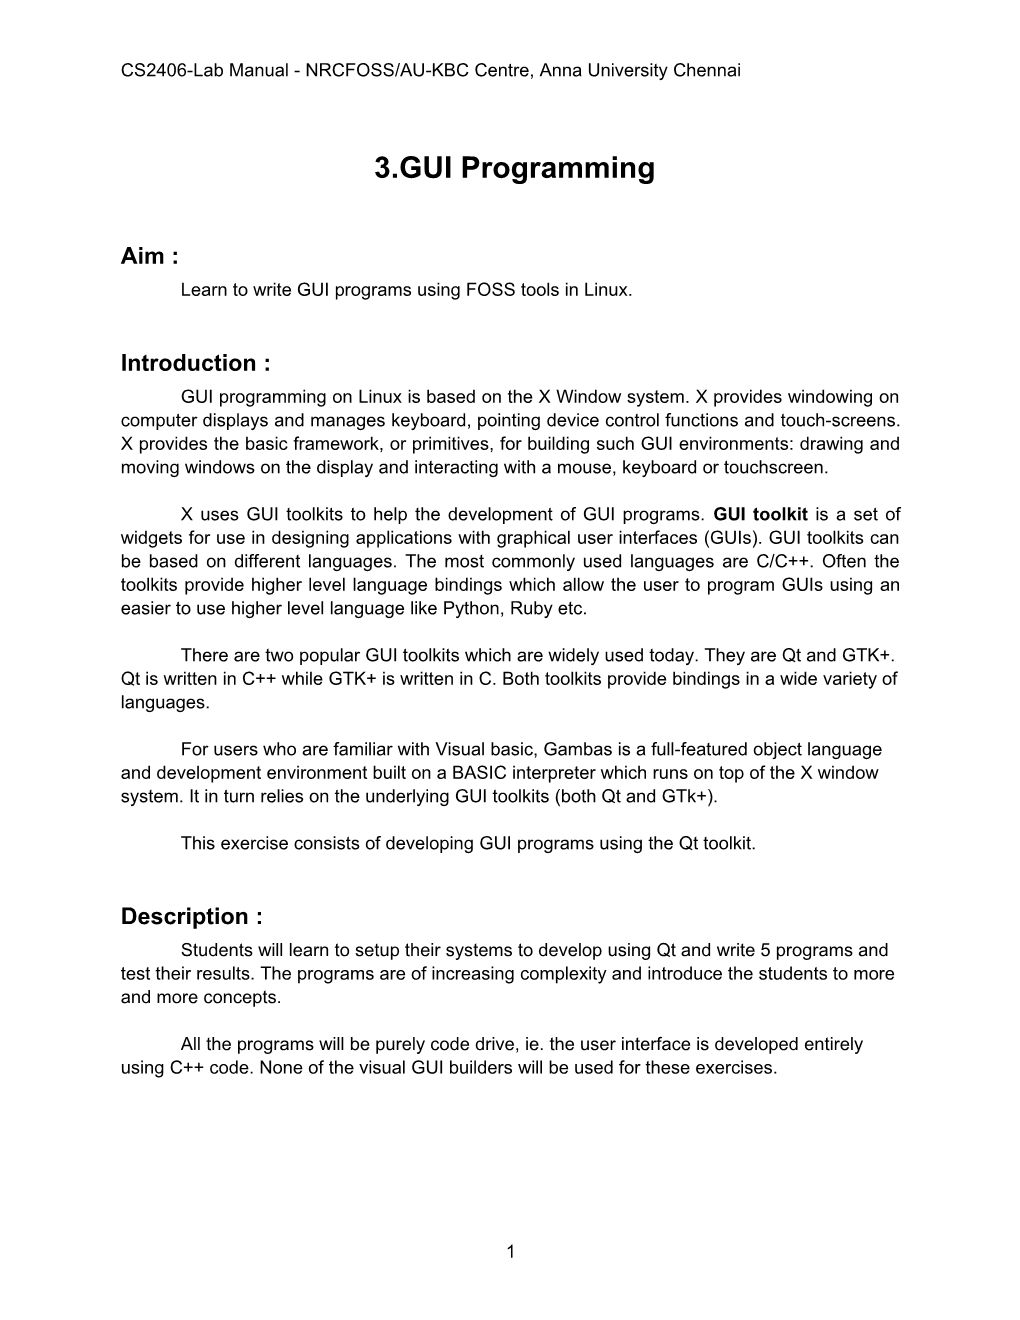 3.GUI Programming